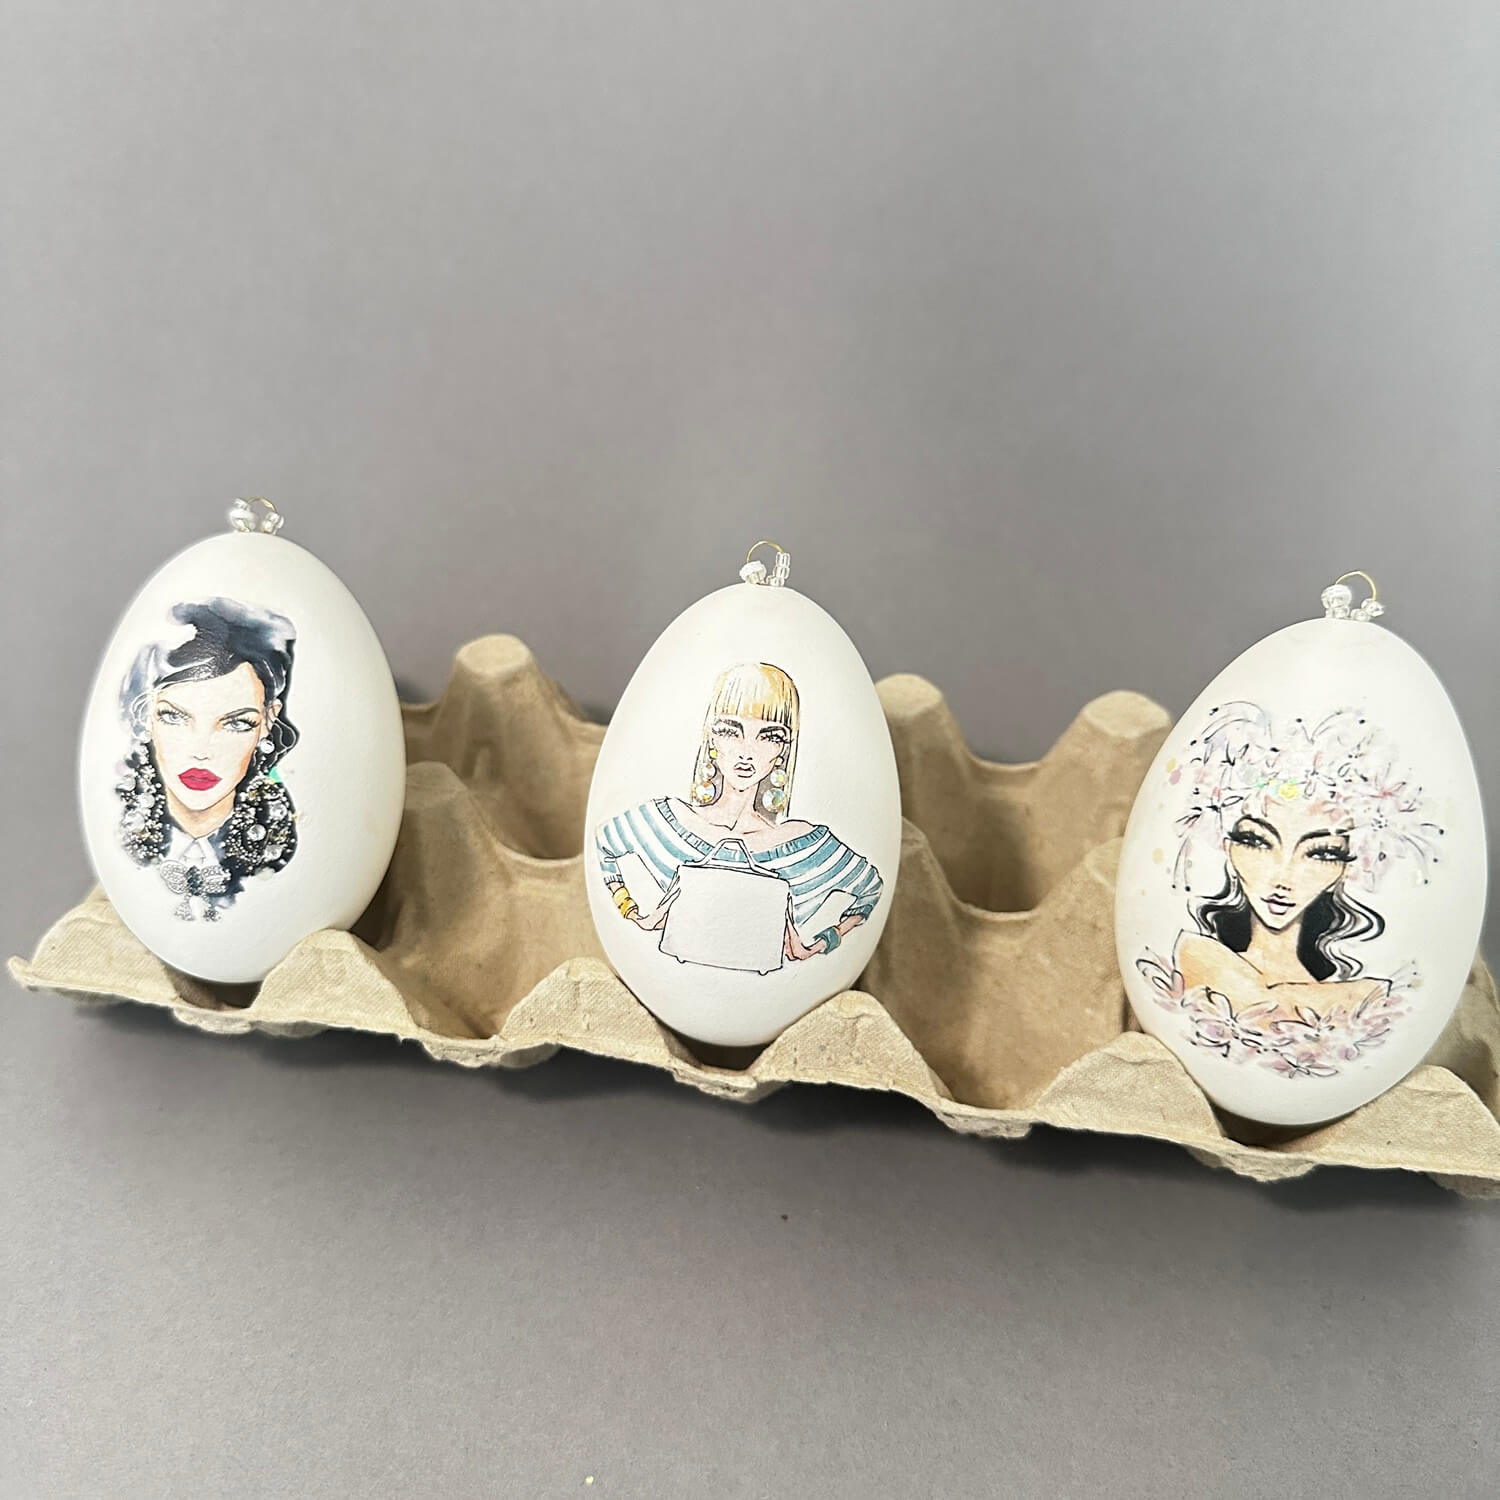 Goose eggs “Statement Eggs”, set of 3